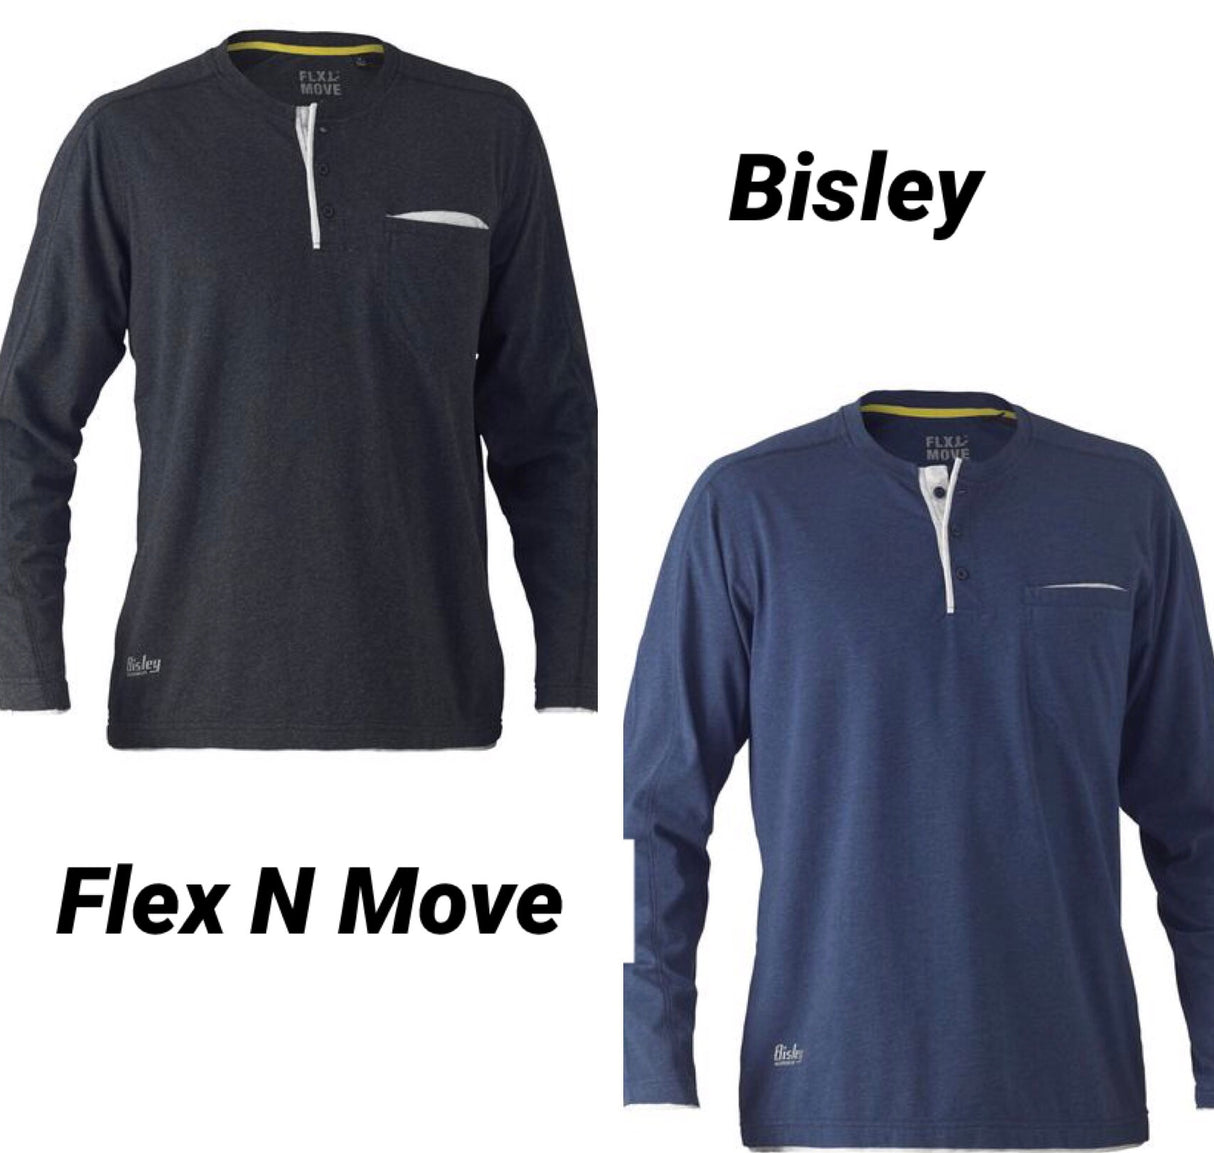 Bisley Flex N Move Henley Long Sleeved T shirt